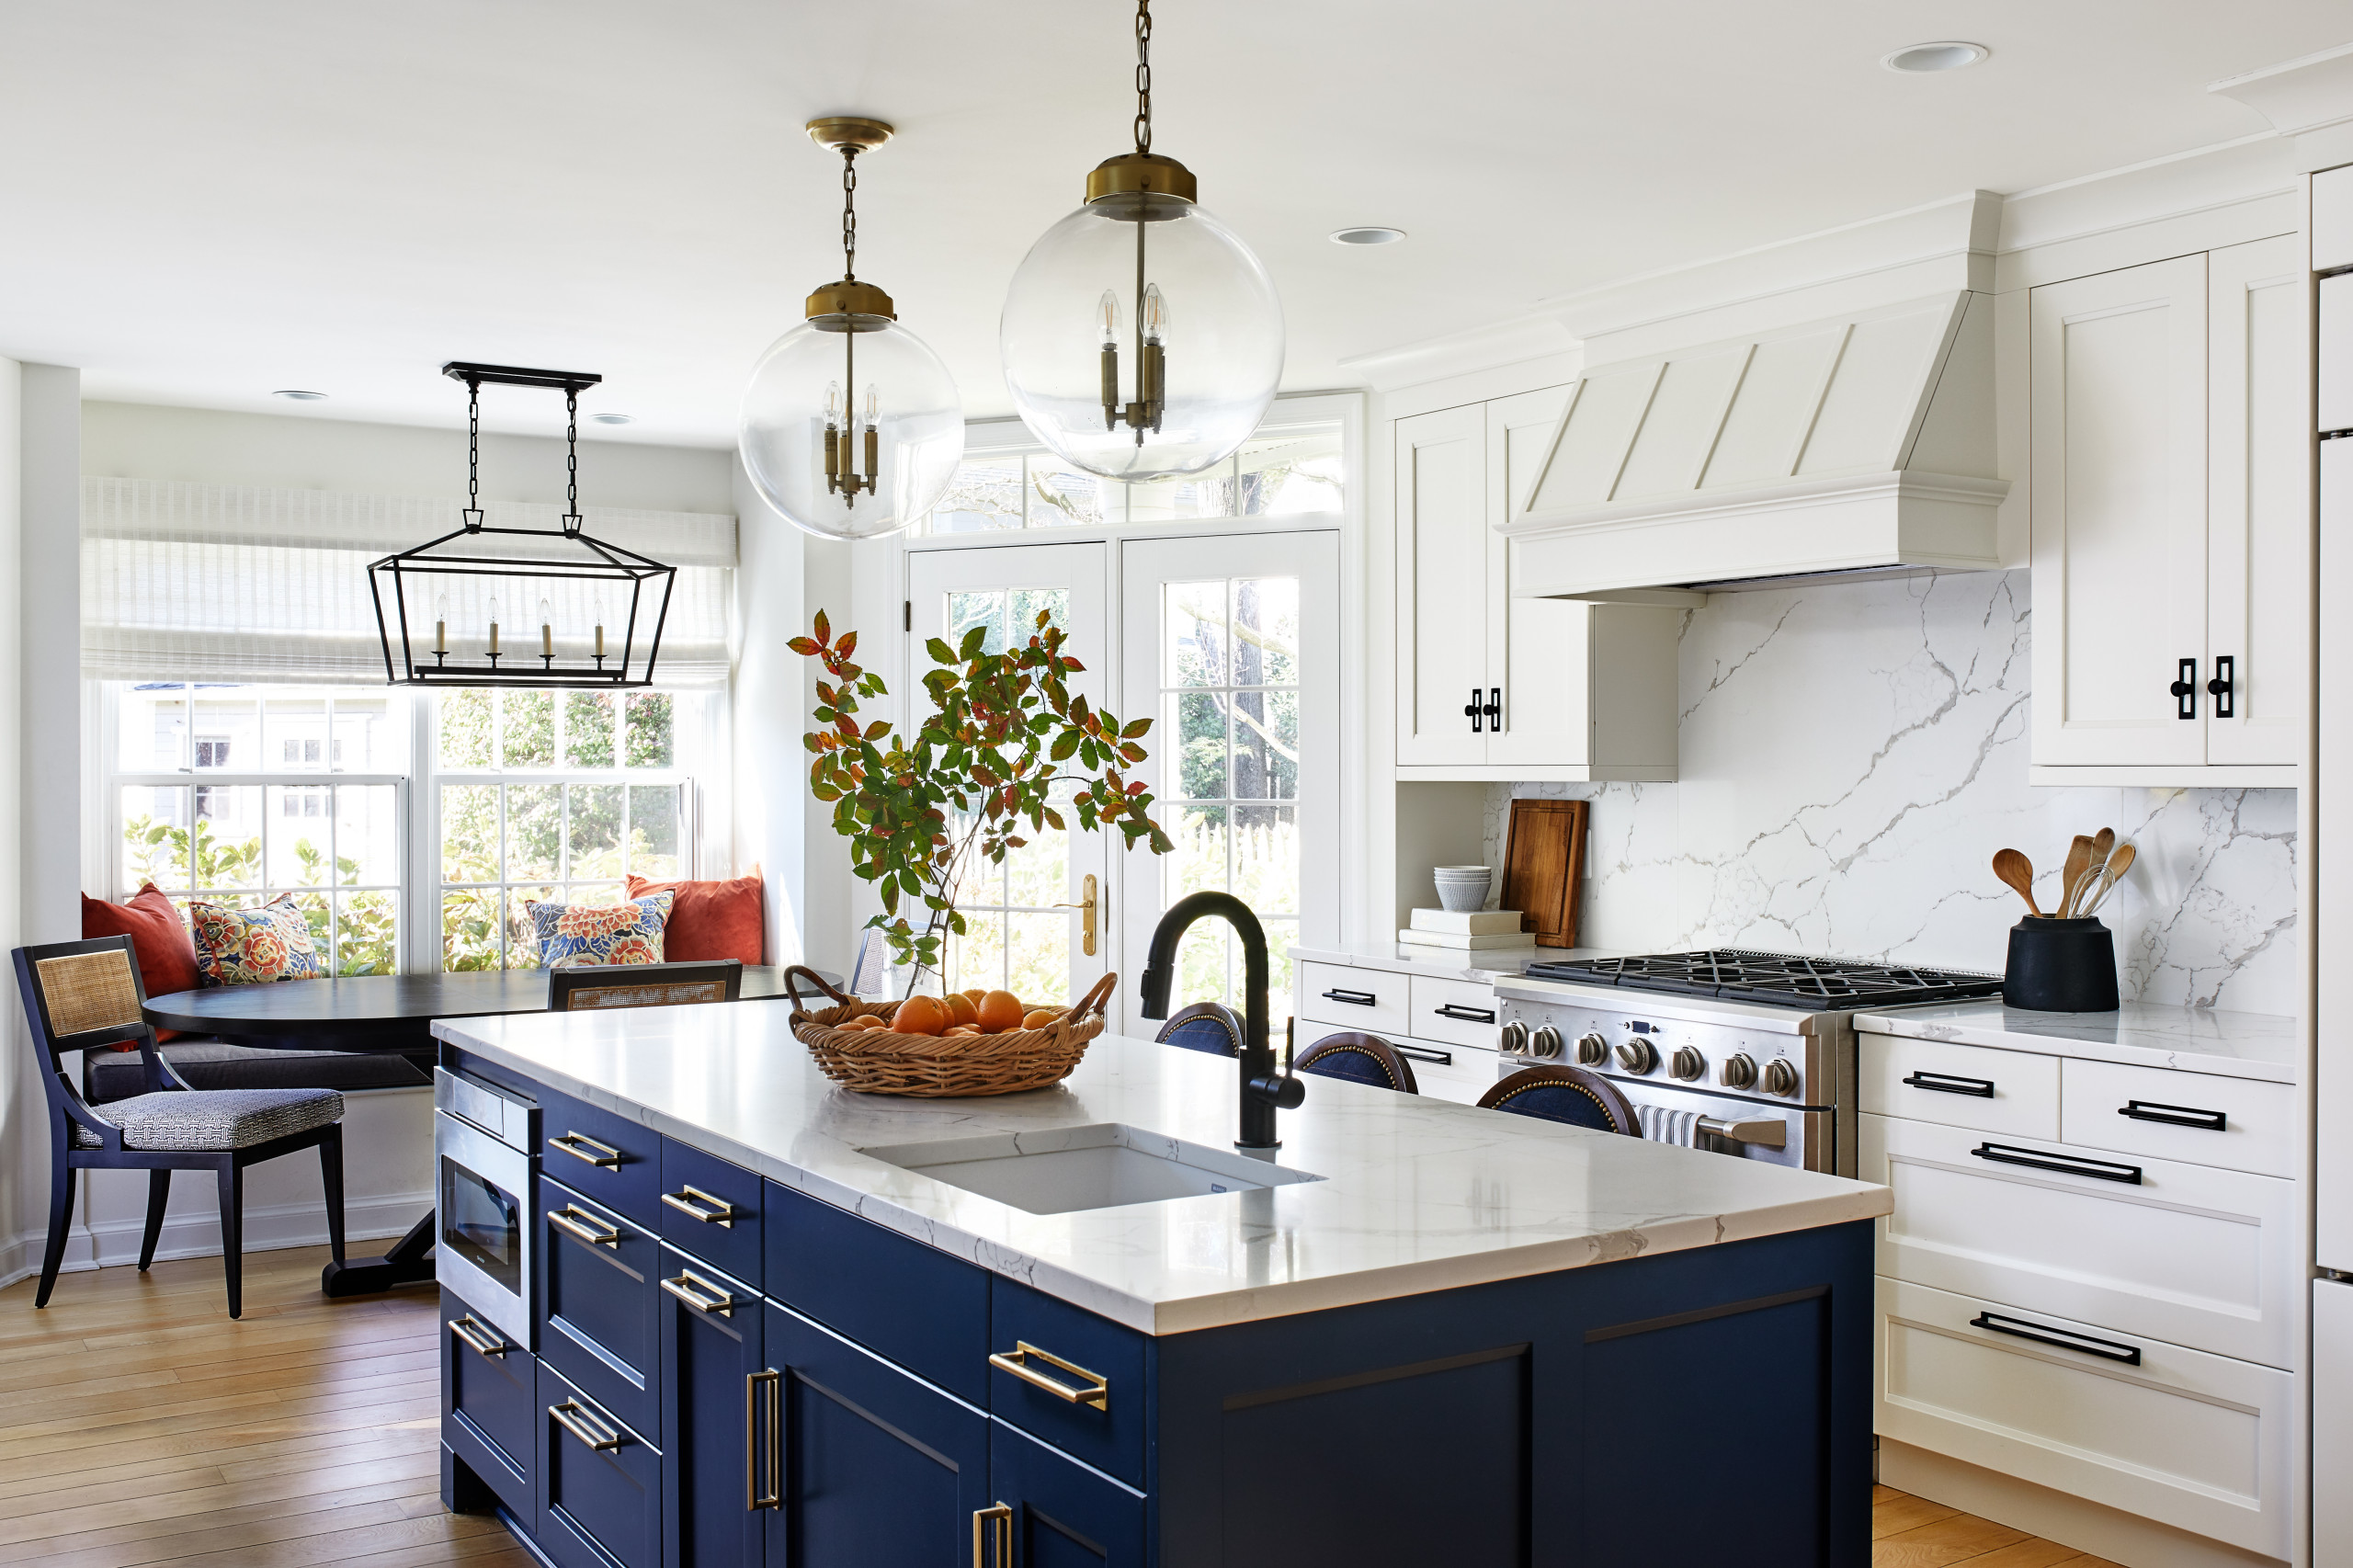 https://st.hzcdn.com/simgs/pictures/kitchens/bright-blue-and-white-kitchen-haus-interior-design-img~ff81511b0e9728ad_14-8161-1-c40a0c2.jpg